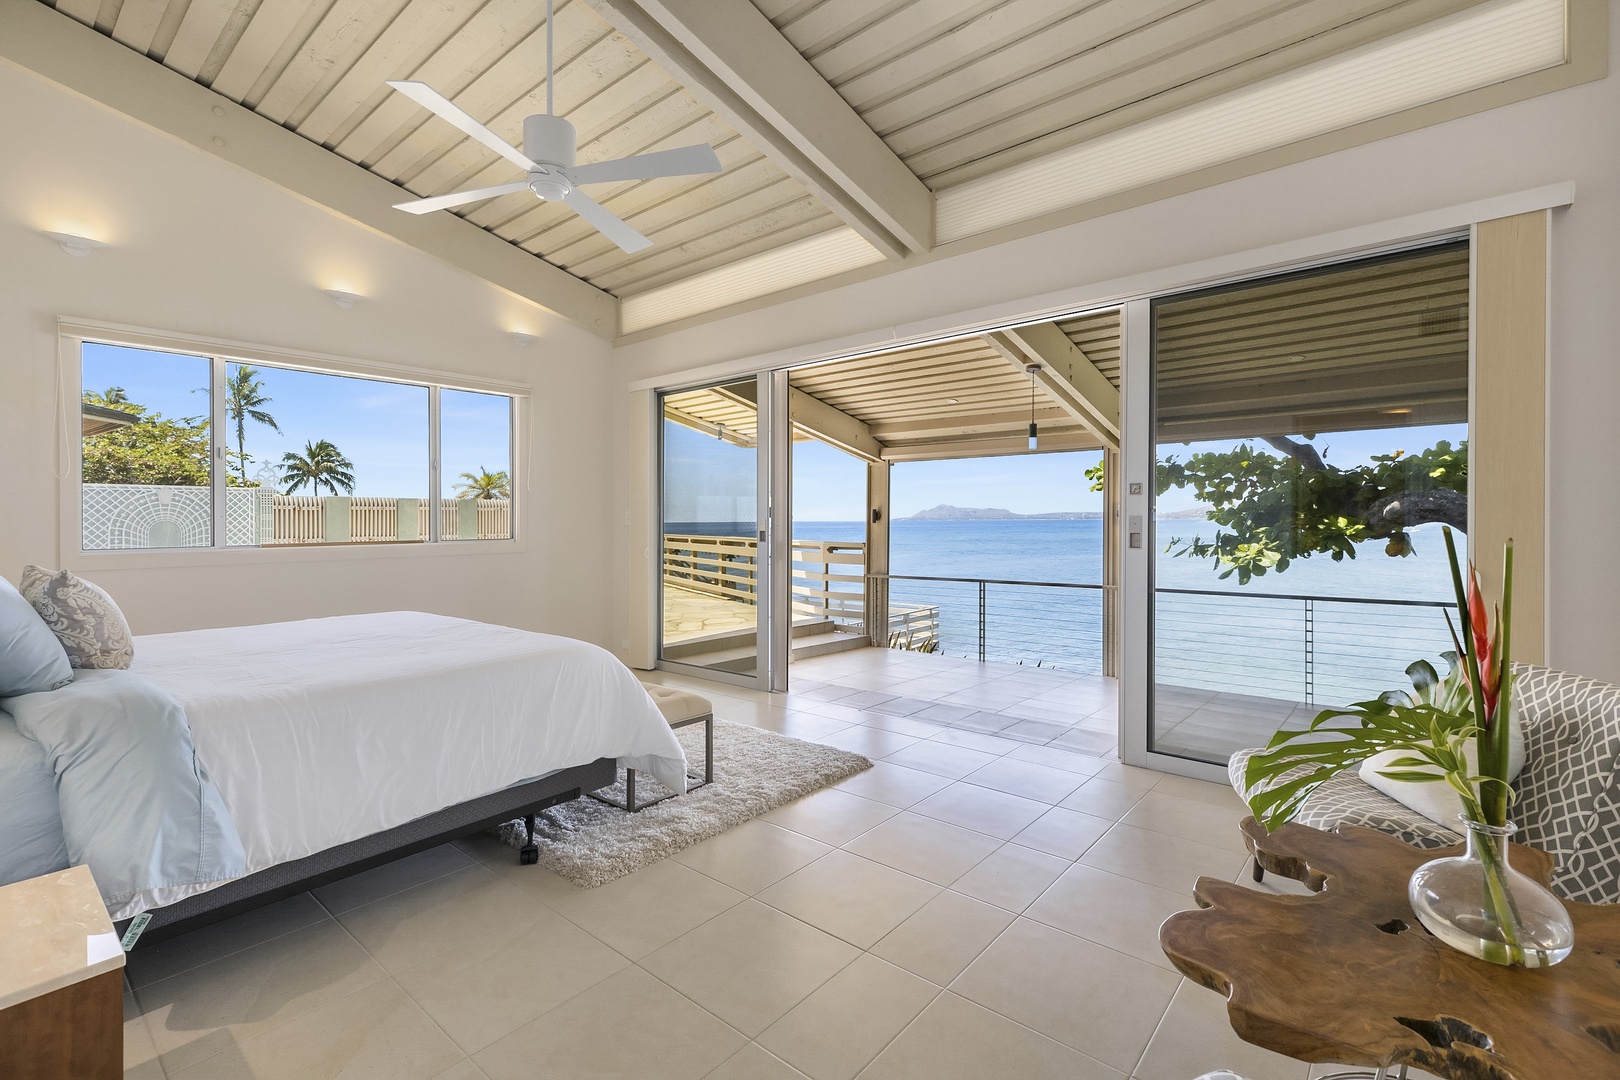 Honolulu Vacation Rentals, Hanapepe House - Primary Bedroom Views